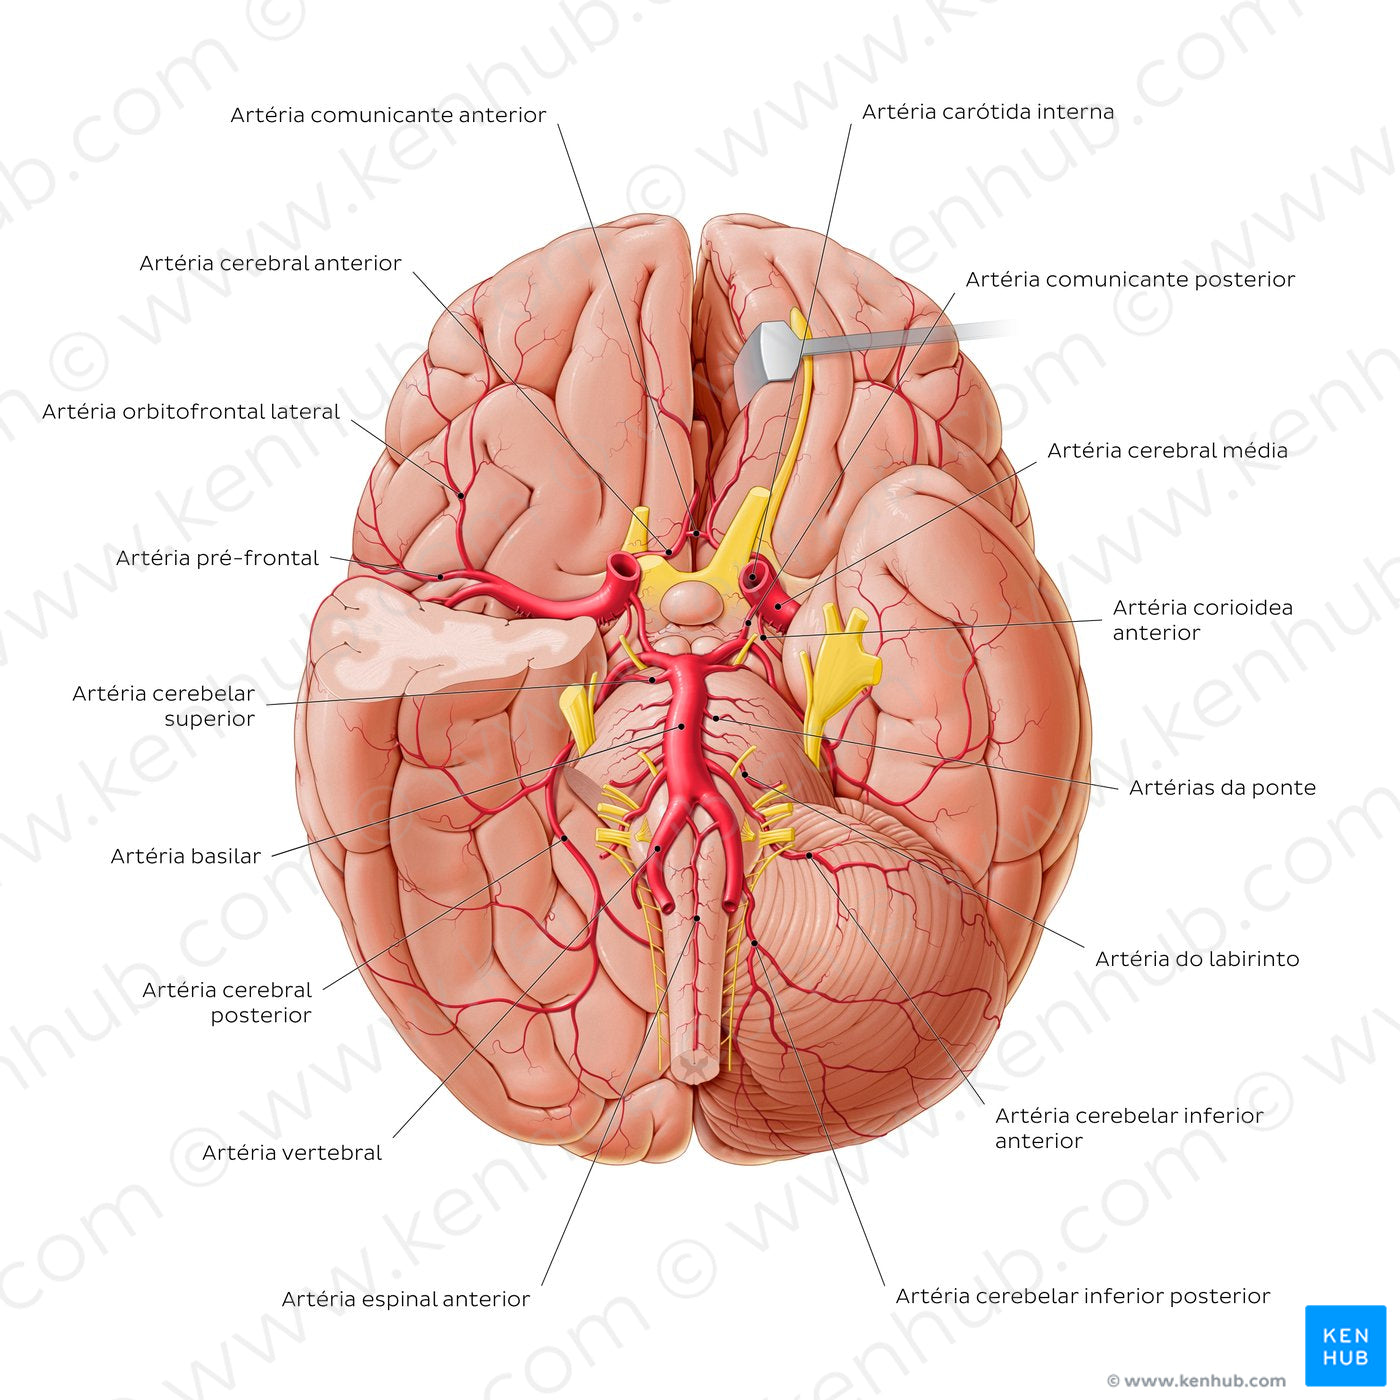 Arteries of the brain II (Portuguese)